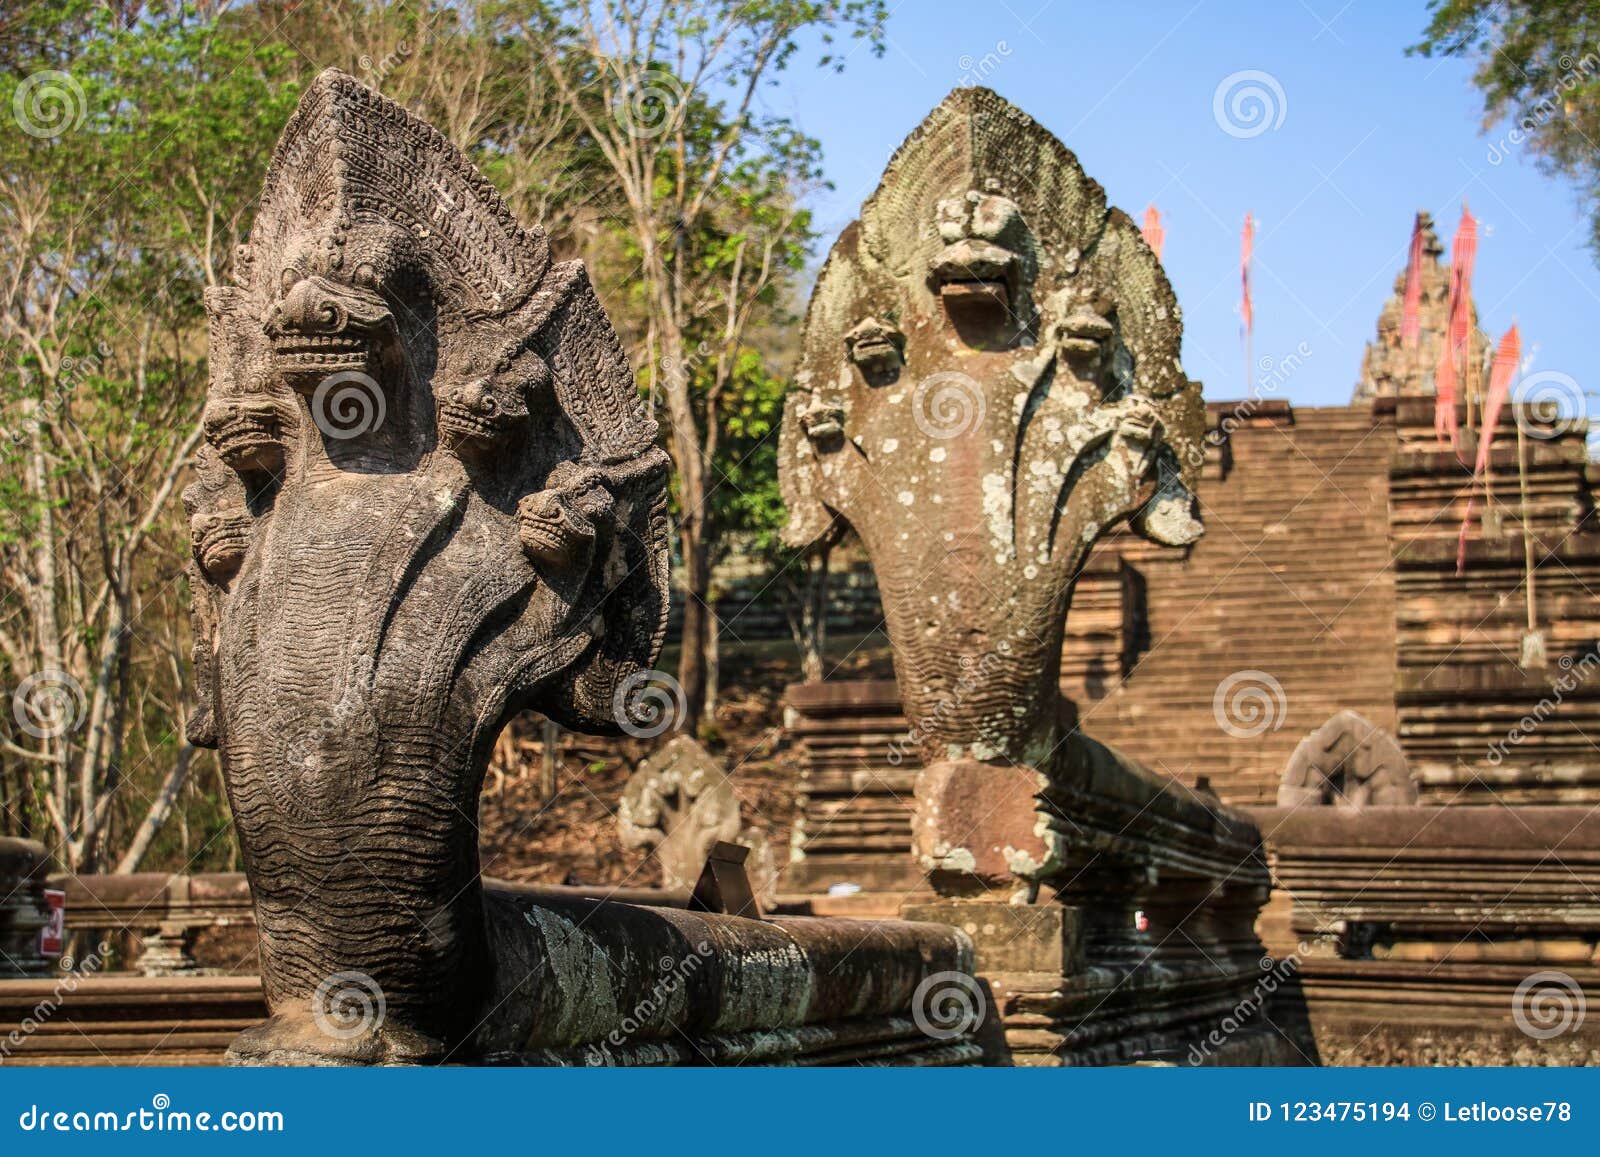 five headed snakes of the phanom rung temple around nang rong, buriram, thailand.